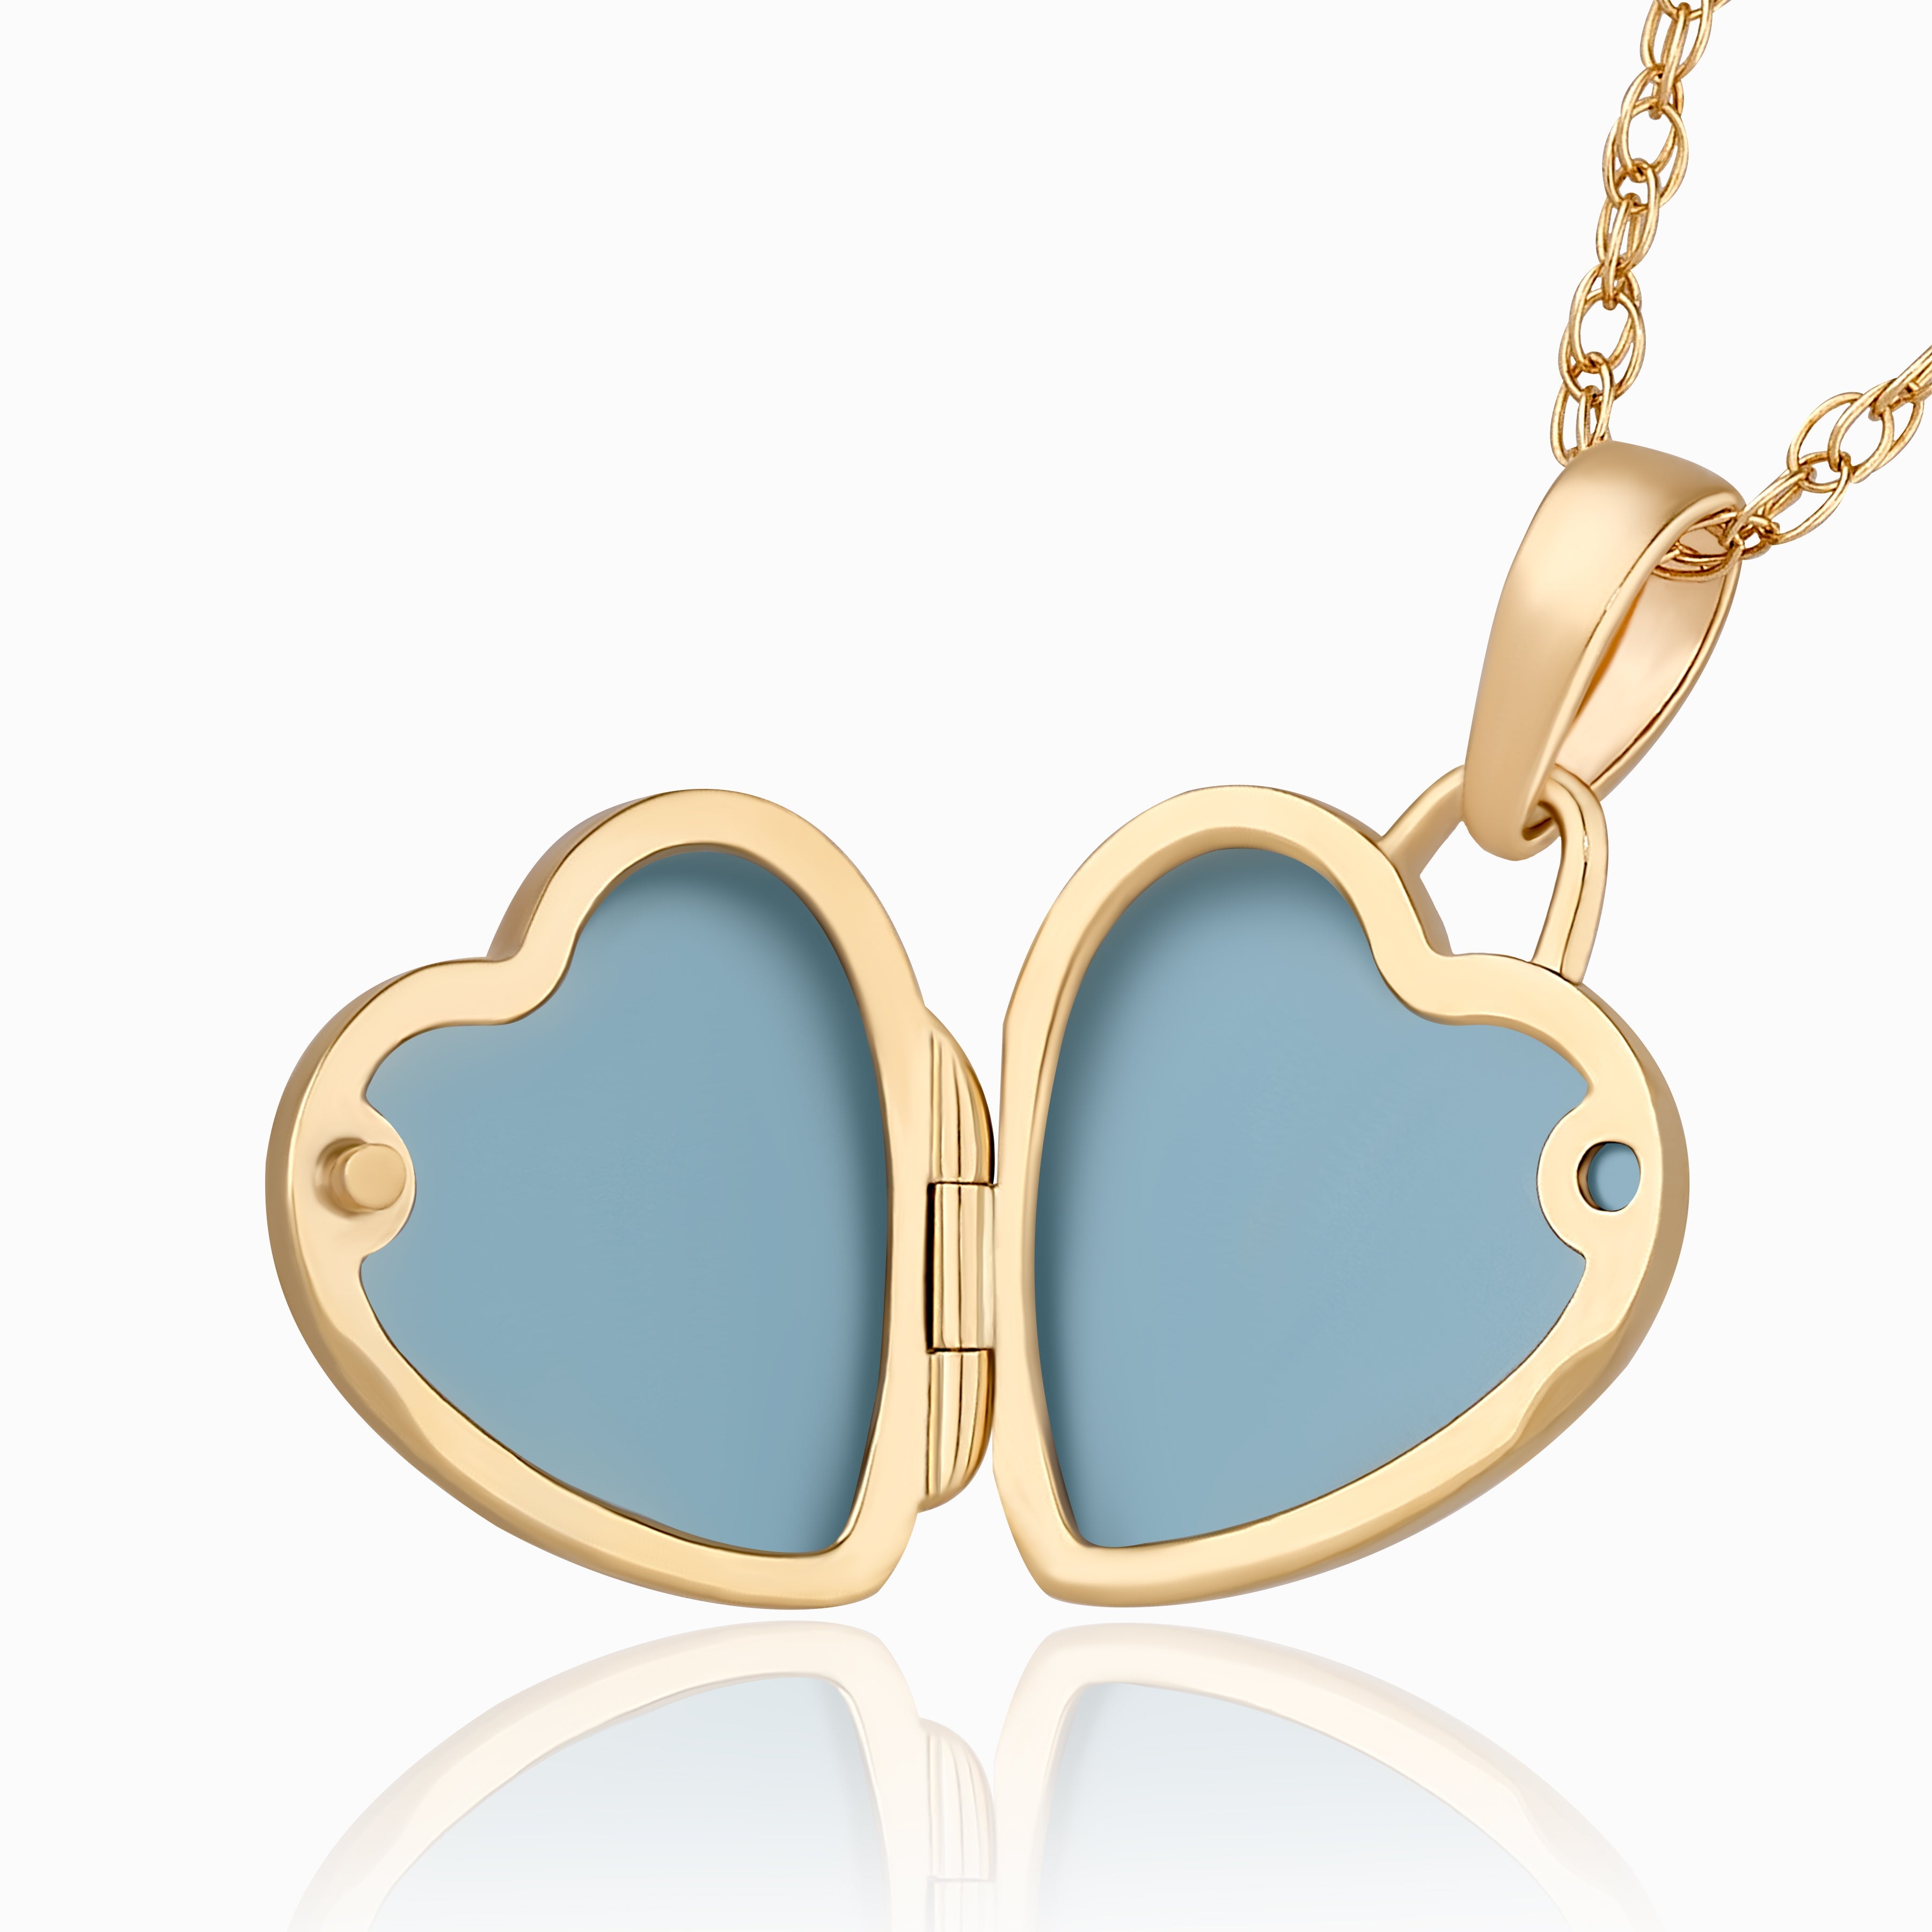 Product title: Tiny Gold and Diamond Heart Locket, product type: Locket